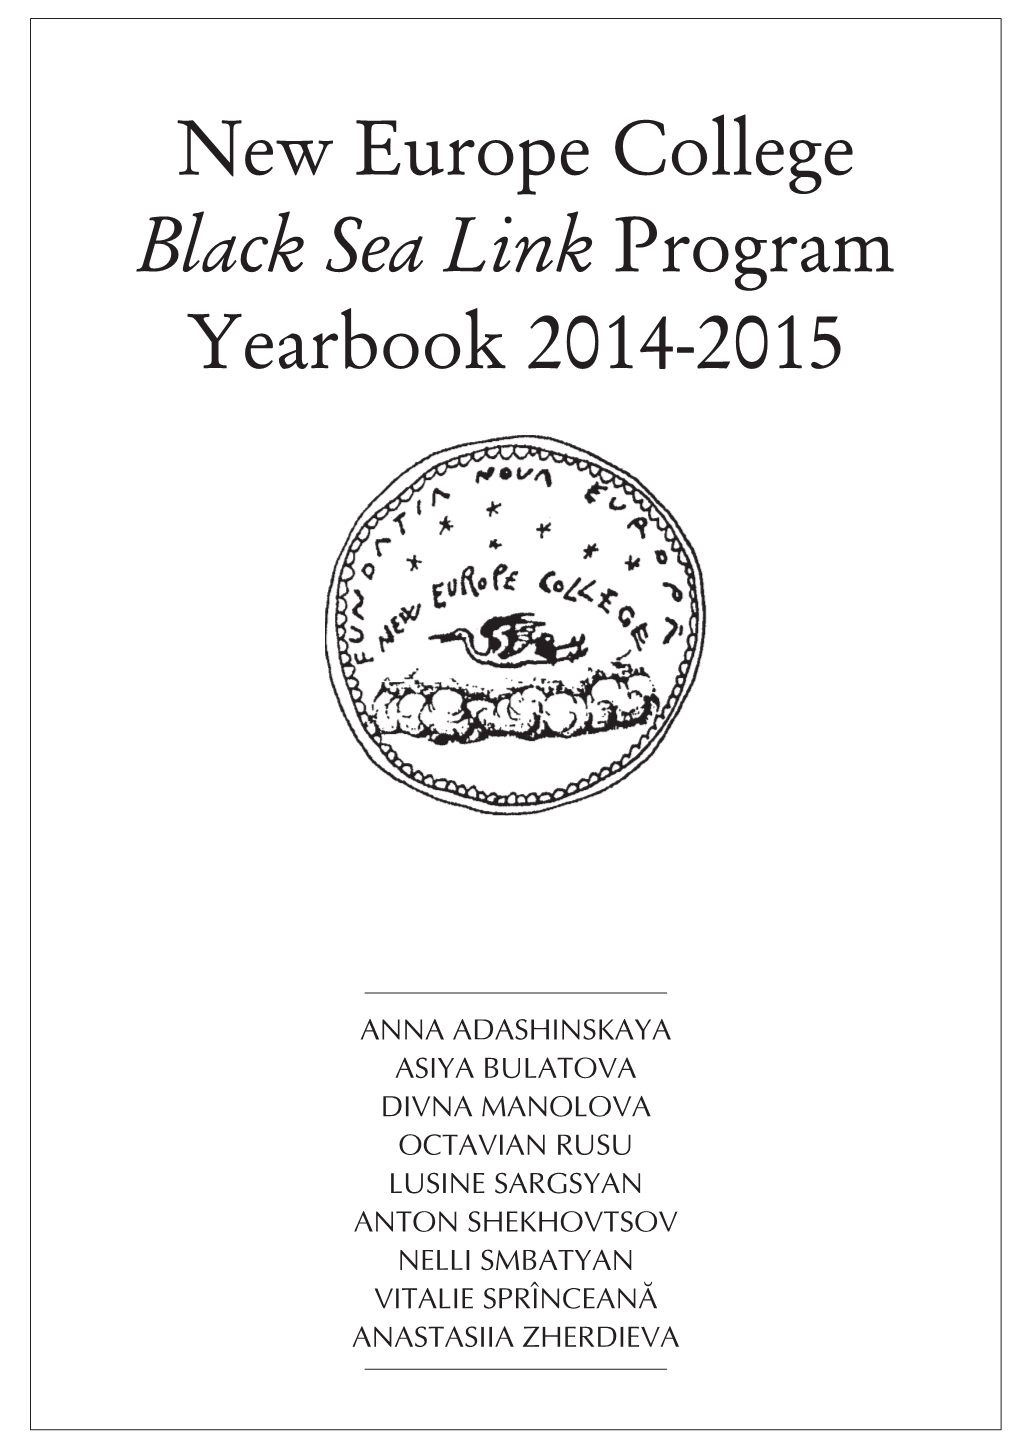 New Europe College Black Sea Link Program Yearbook 2014-2015 Program Yearbook 2014-2015 Black Sea Link